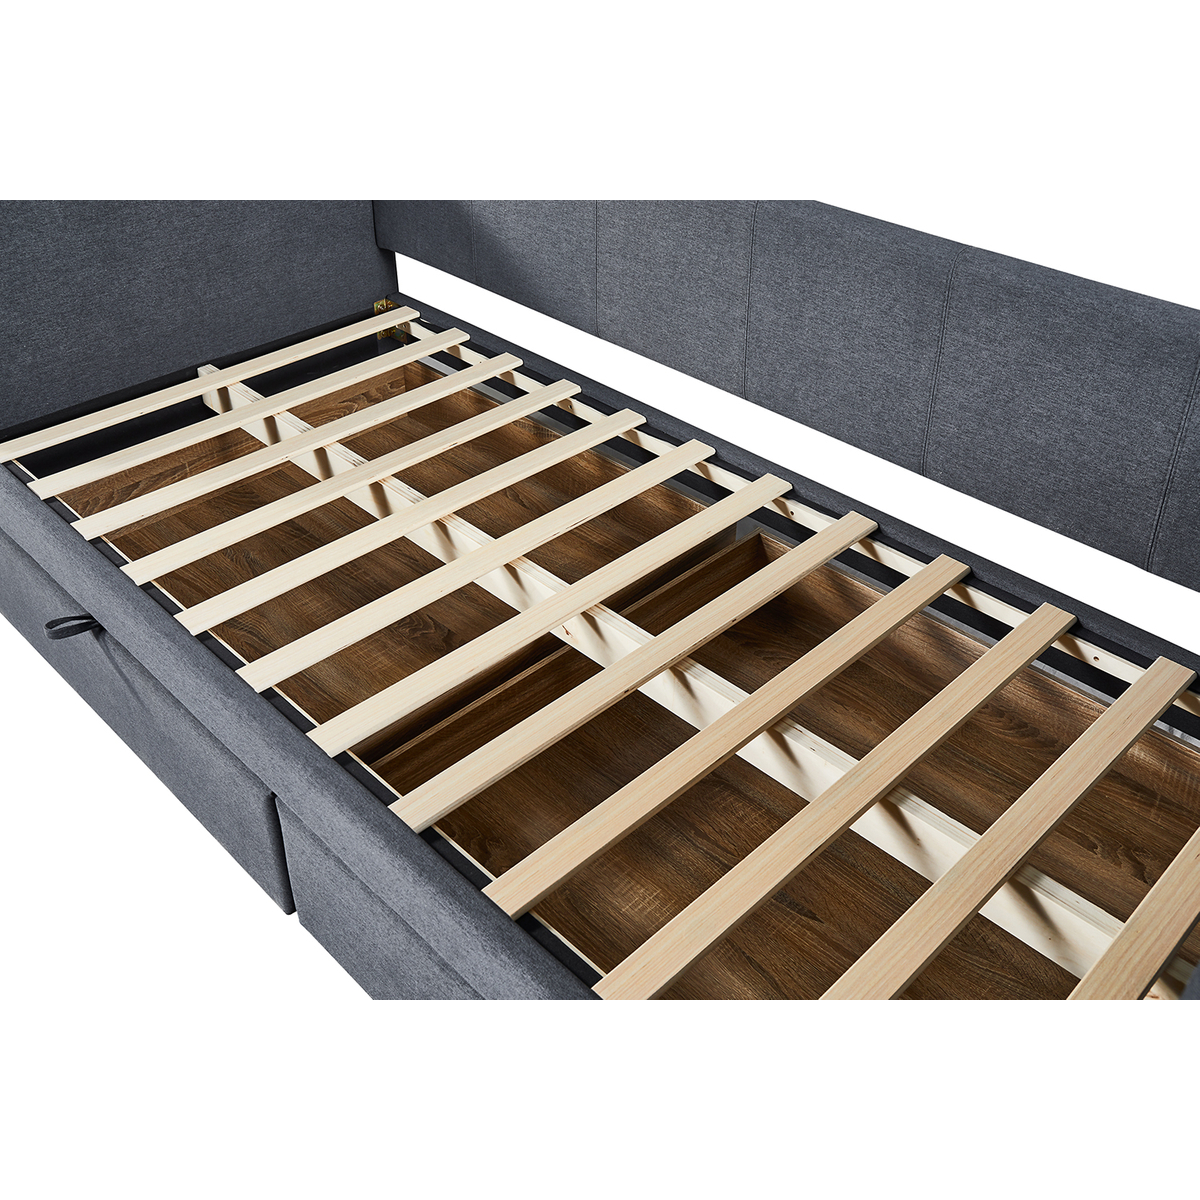 Interiax Liam Bed - Comfort Inclusief 2 schuiven en lattenbodem (90 x 200 cm)